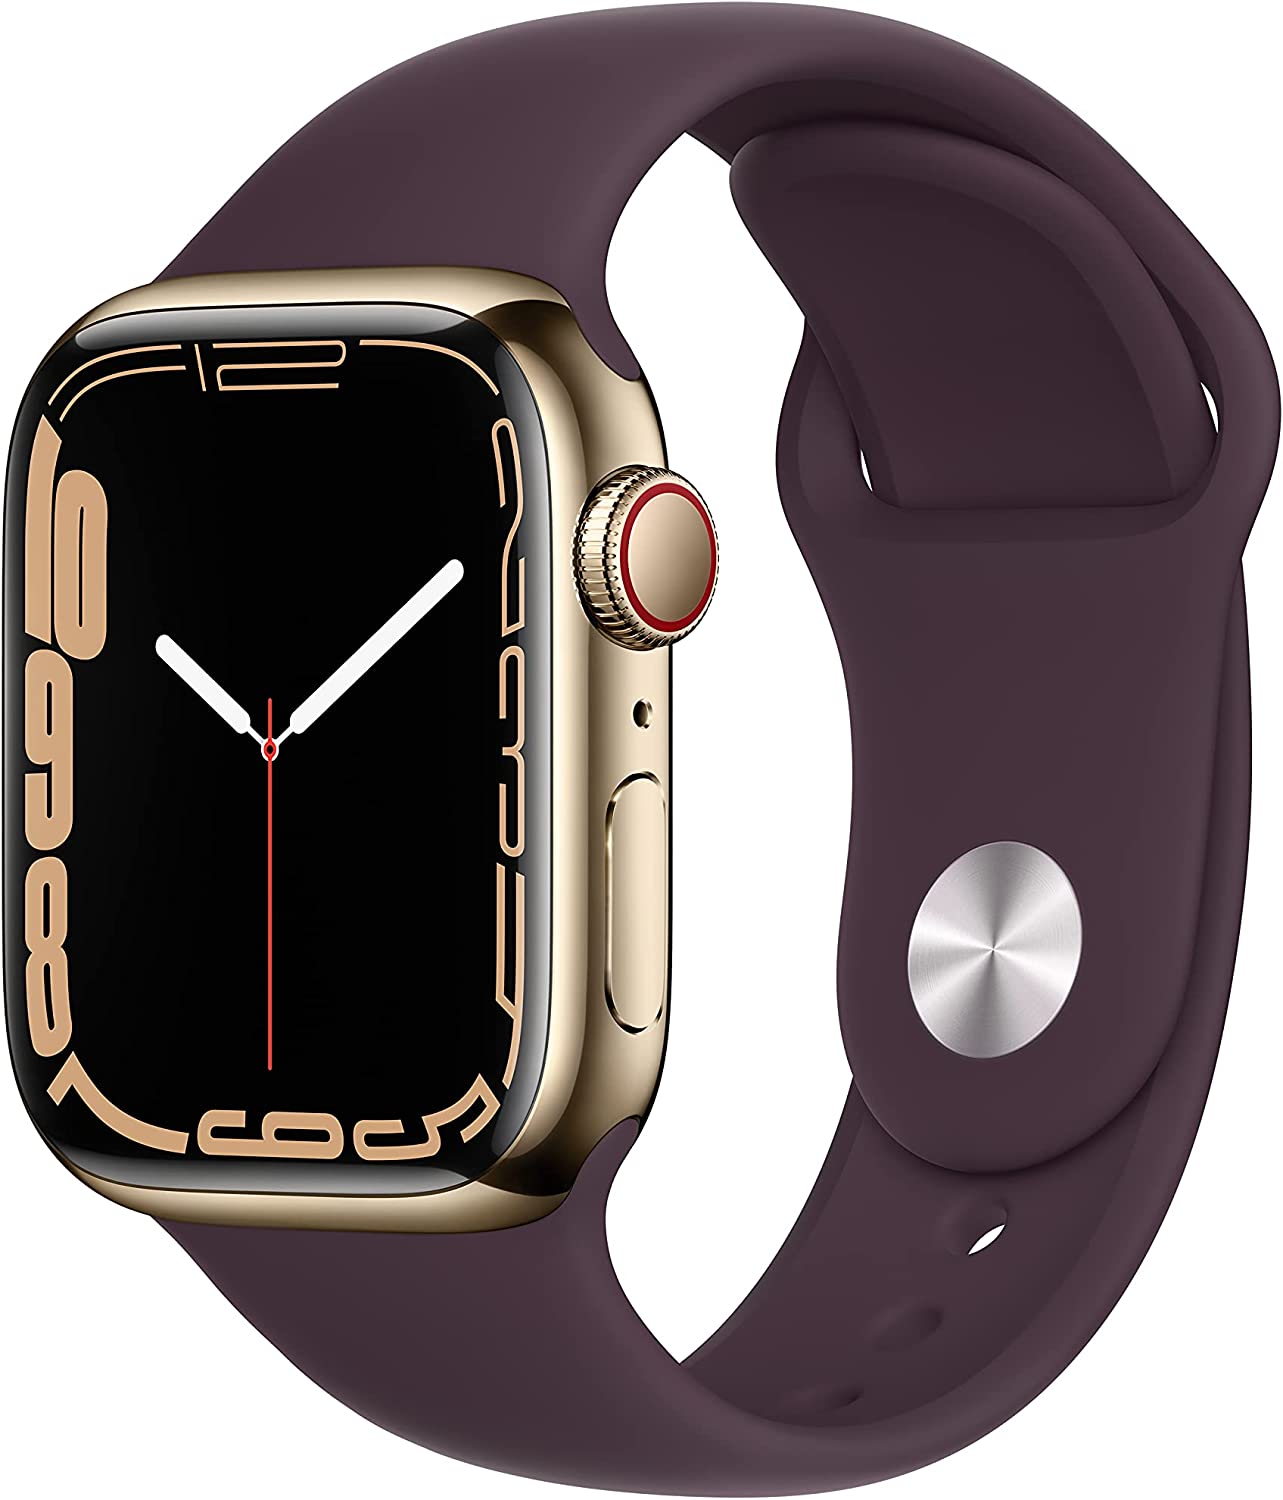 Apple Watch Series 7 Cellular Gold Cherry